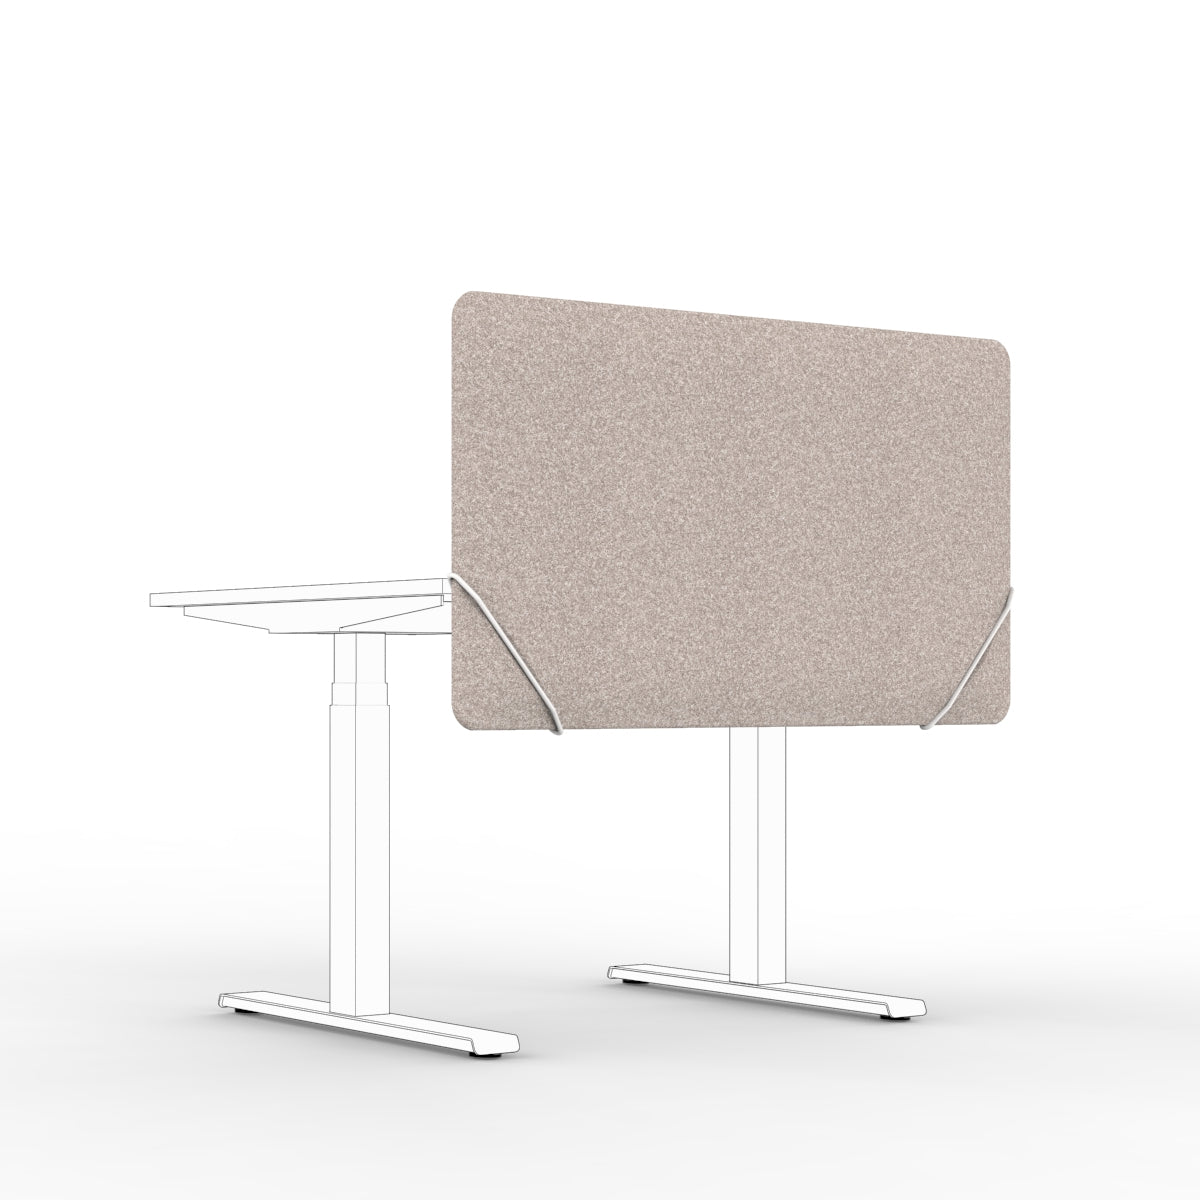 Table screen sound absorber in dark beige wool felt with white slide on table mounts. 